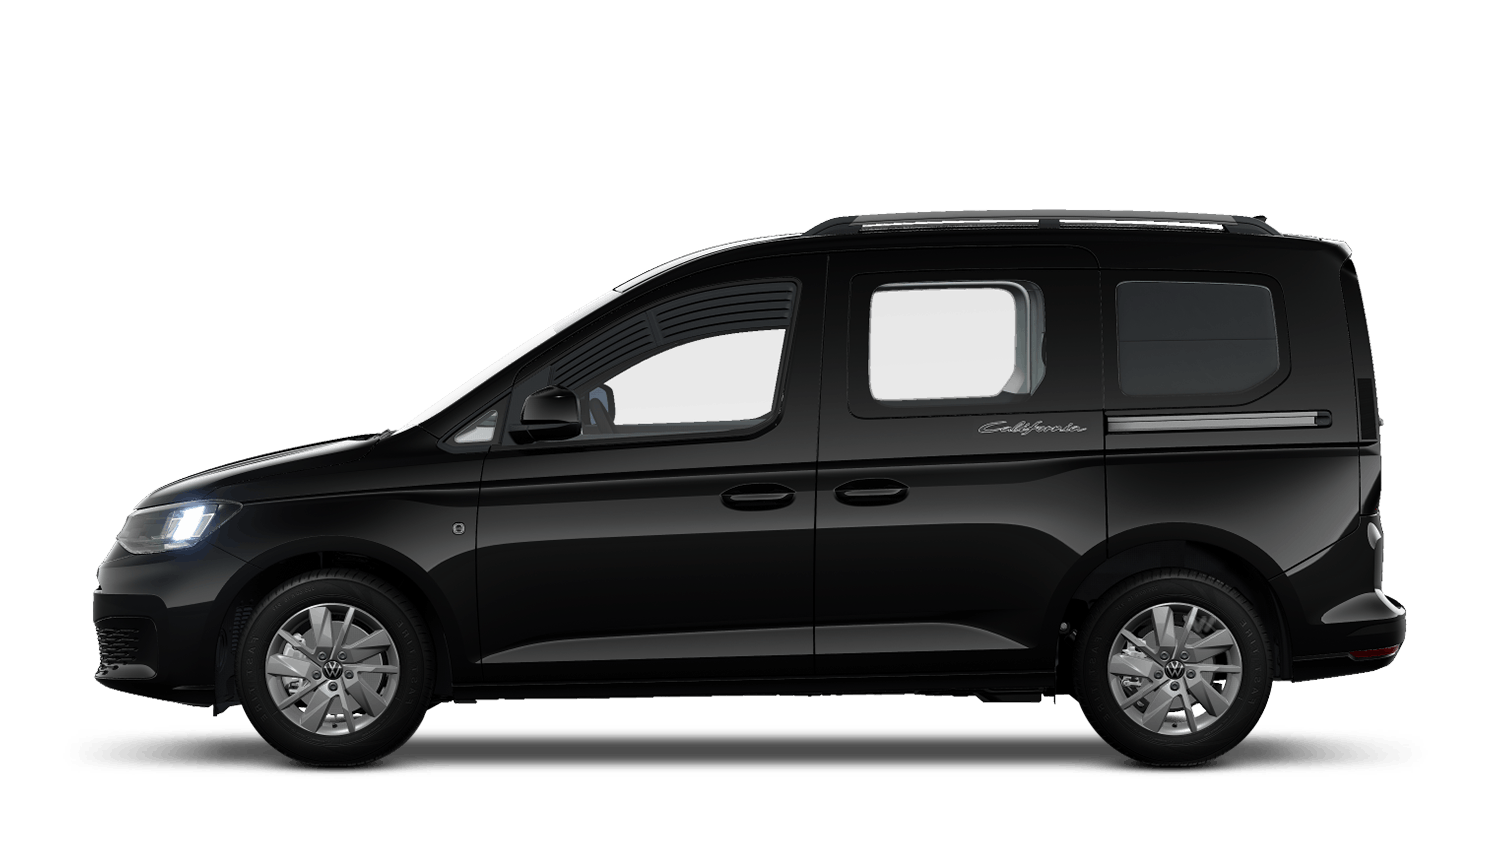 Black Volkswagen Caddy for sale